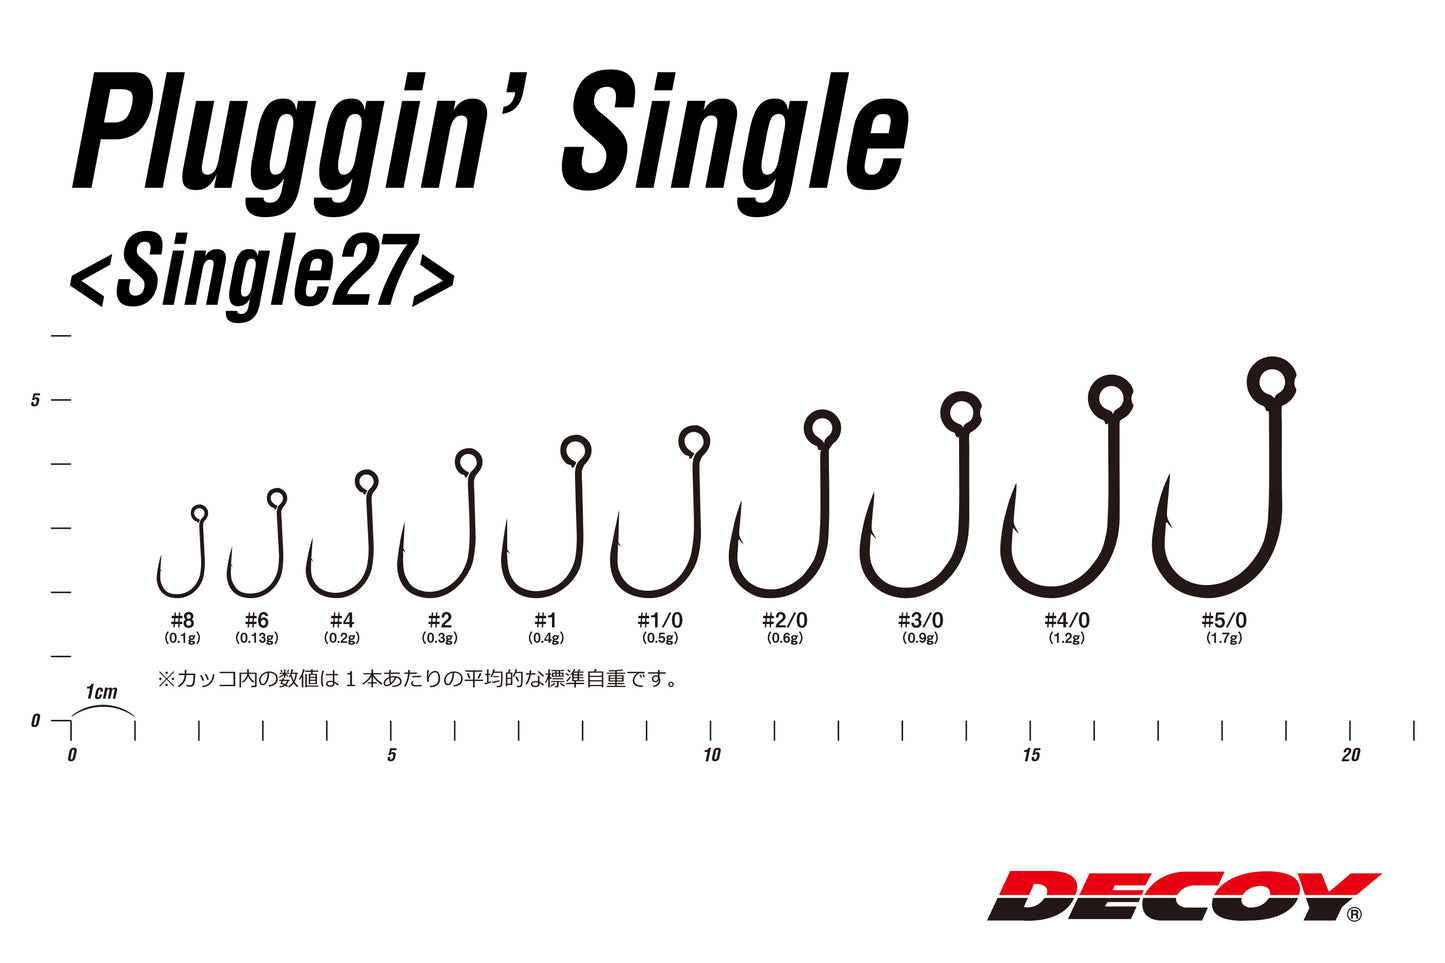 Single27 Pluggin' Single